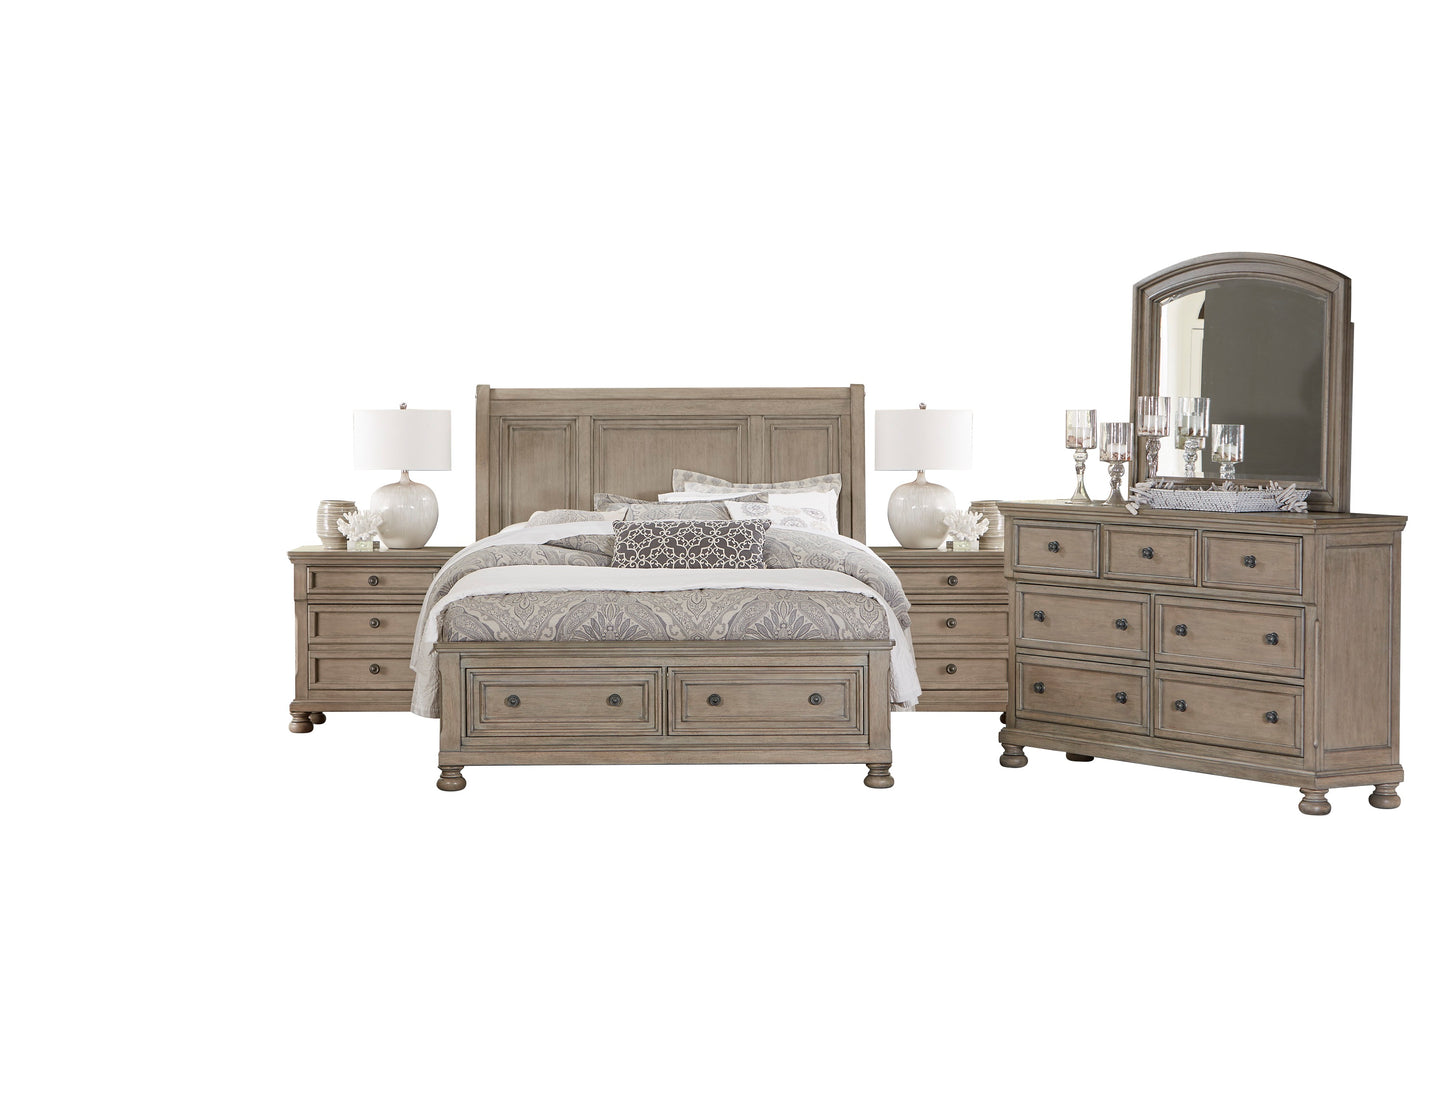 Broville Rustic 5PC Bedroom Set Cal King Sleigh Storage Bed, Dresser, Mirror, 2 Nightstand in Weathered Wood